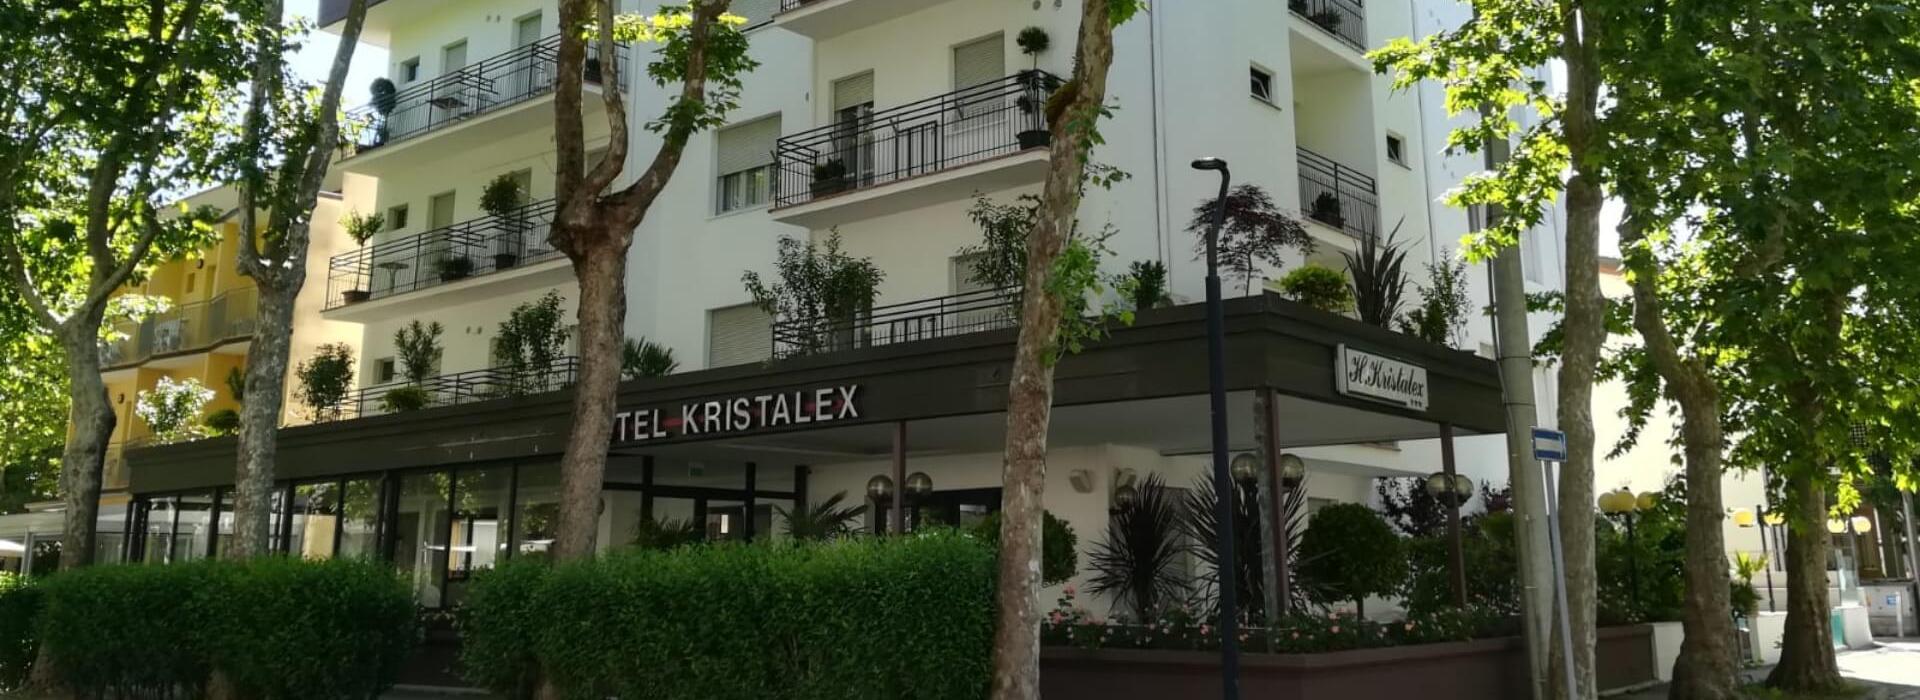 hotelkristalex fr speciale-detente-de-septembre-a-la-mer-a-l-hotel-3-etoiles-de-cesenatico 017